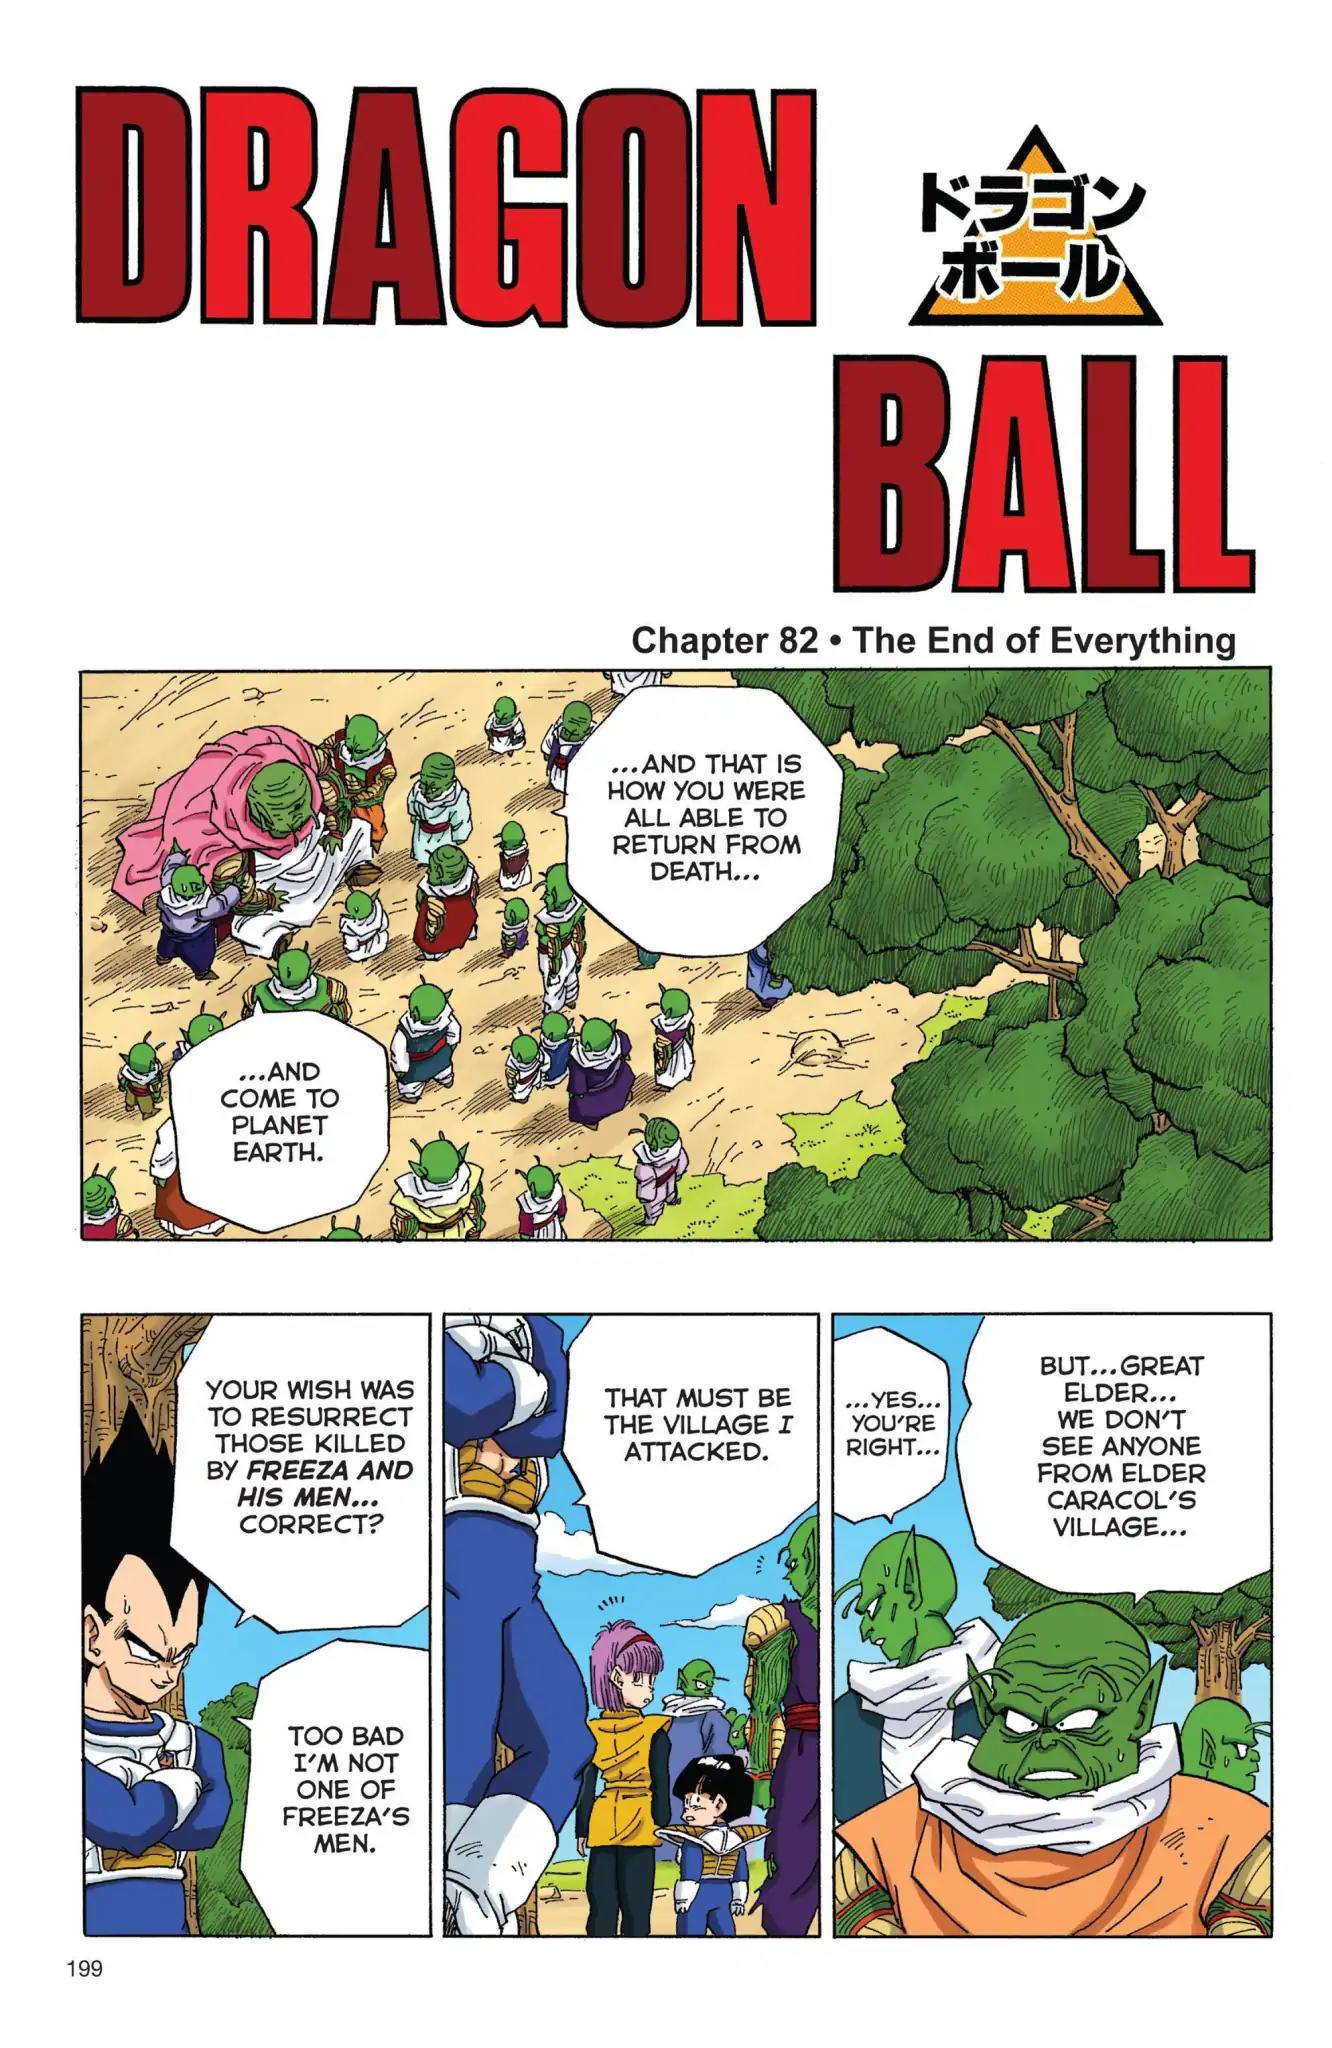 Dragon Ball Full Color Freeza Arc Vol.5 Chapter 082: